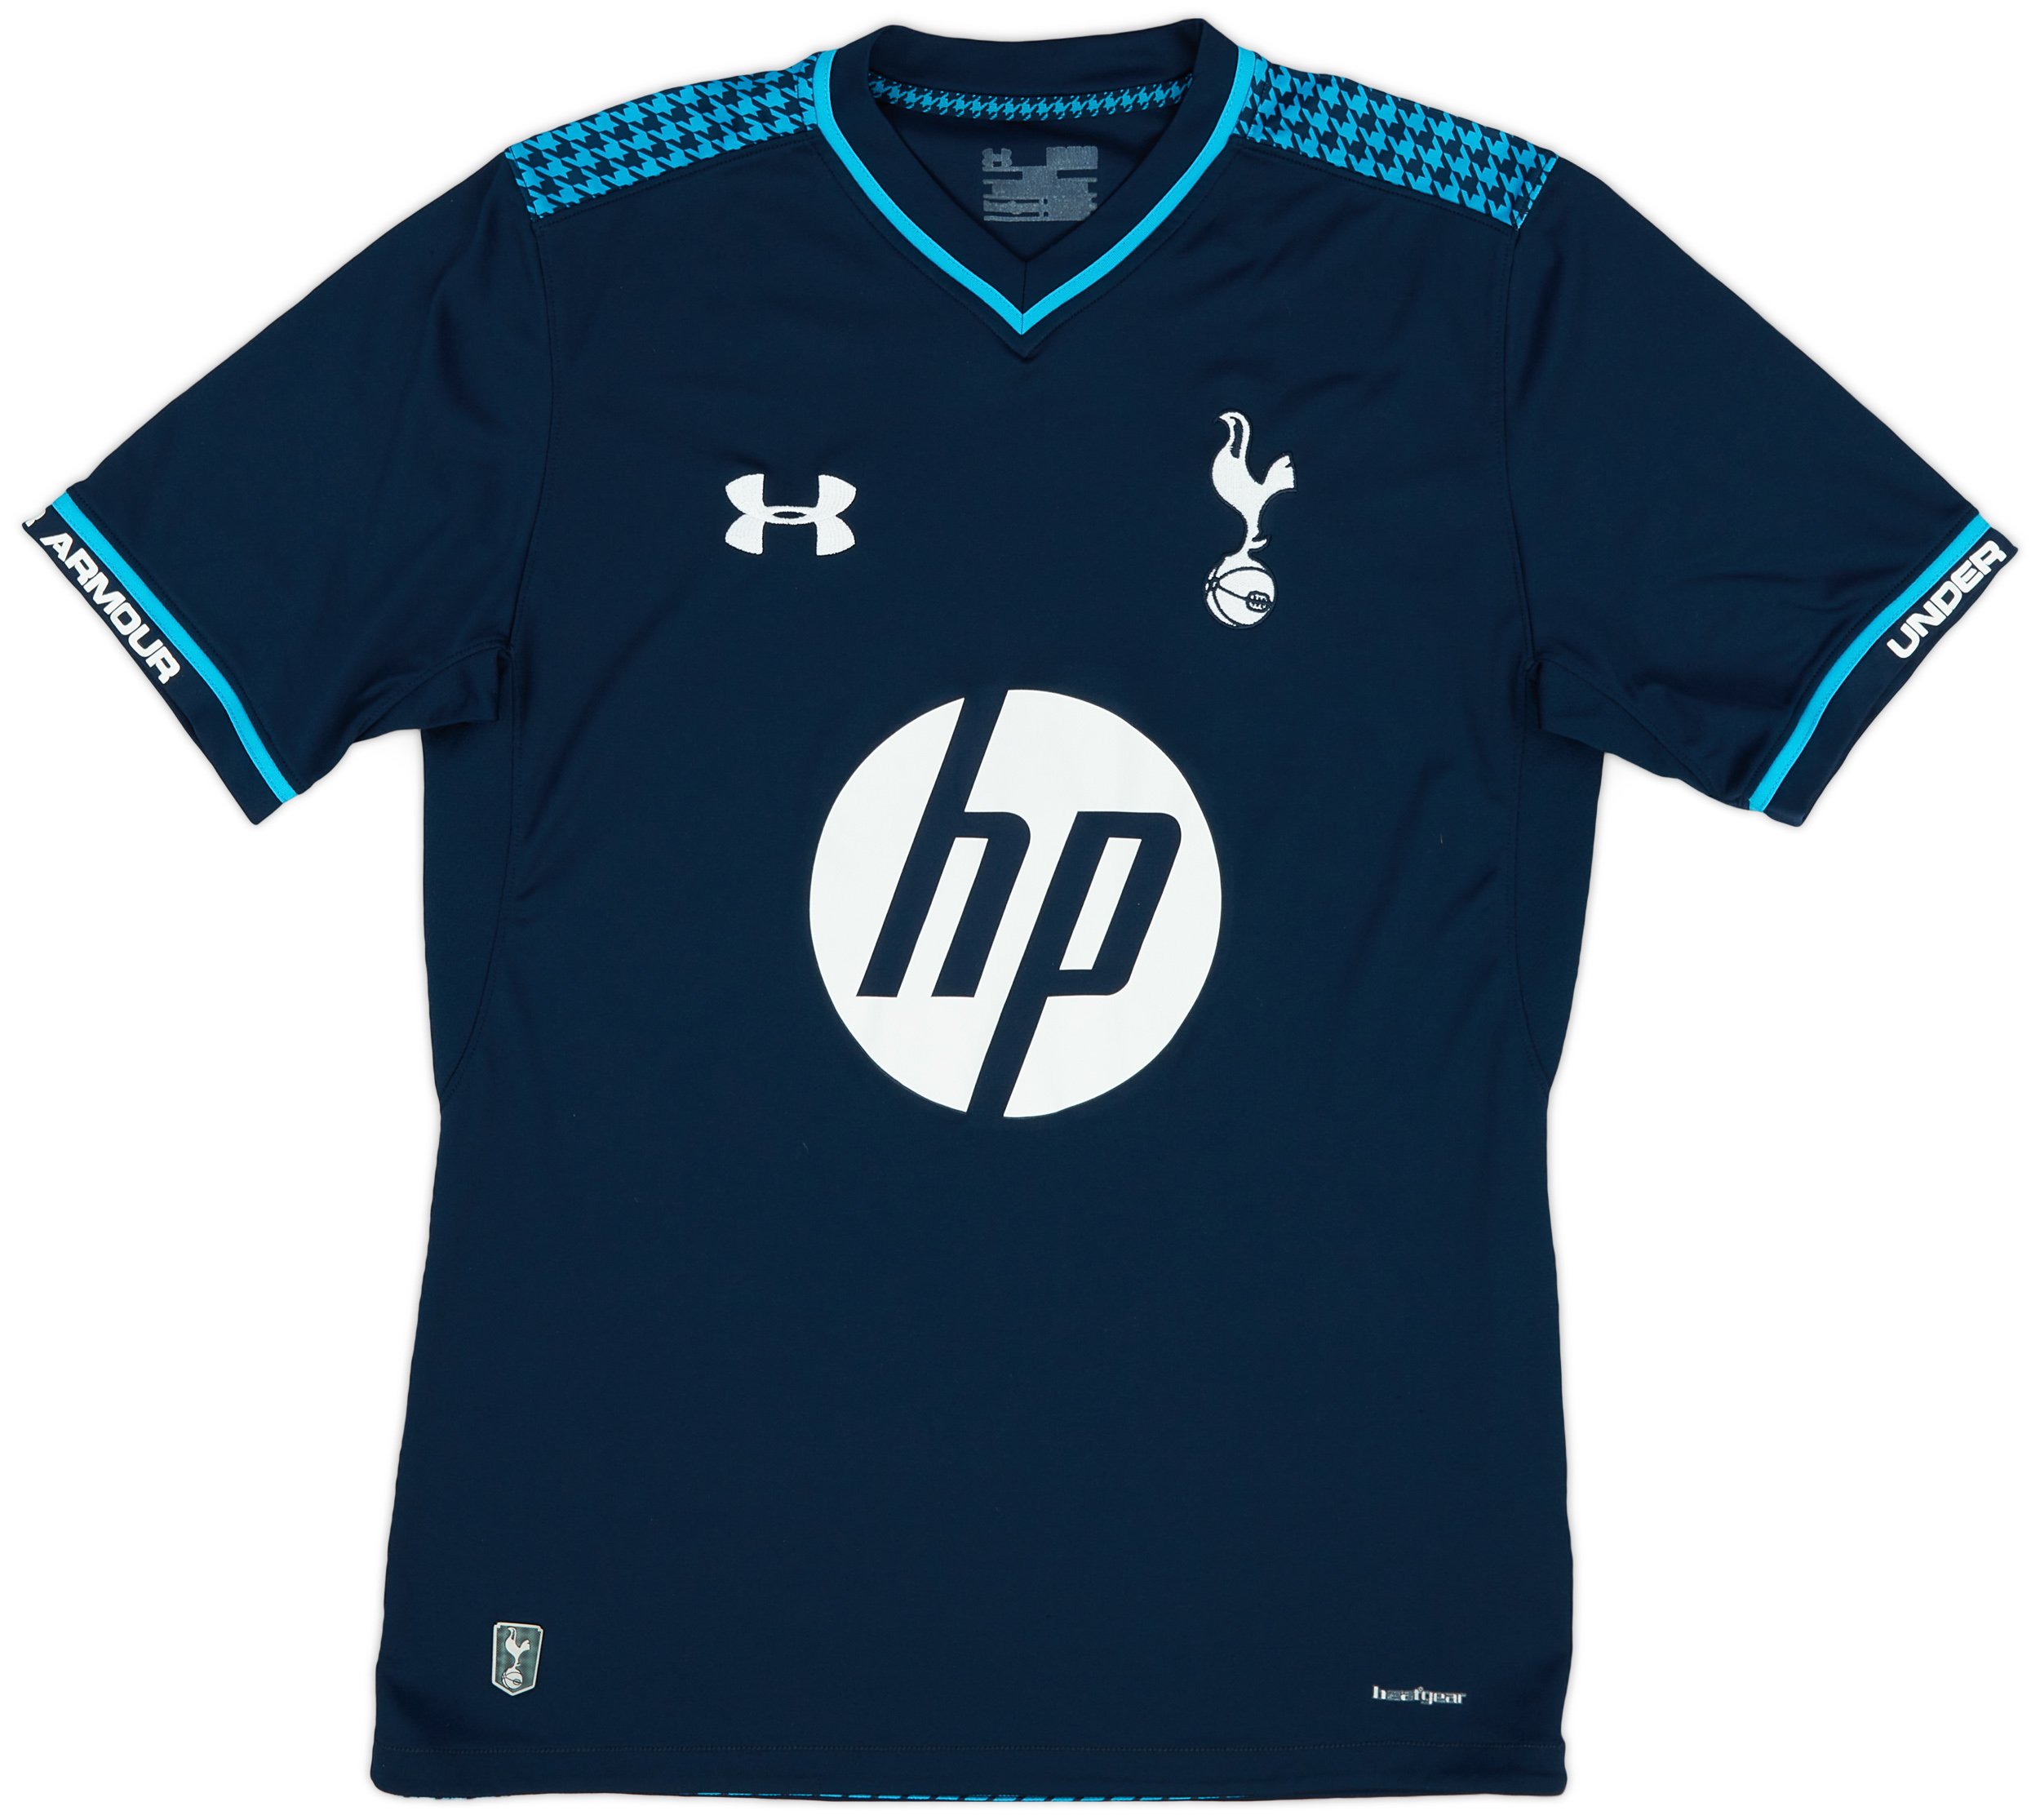 Tottenham Hotspur Third Shirt for 2013-14 Season: Official [PHOTOS] - World  Soccer Talk